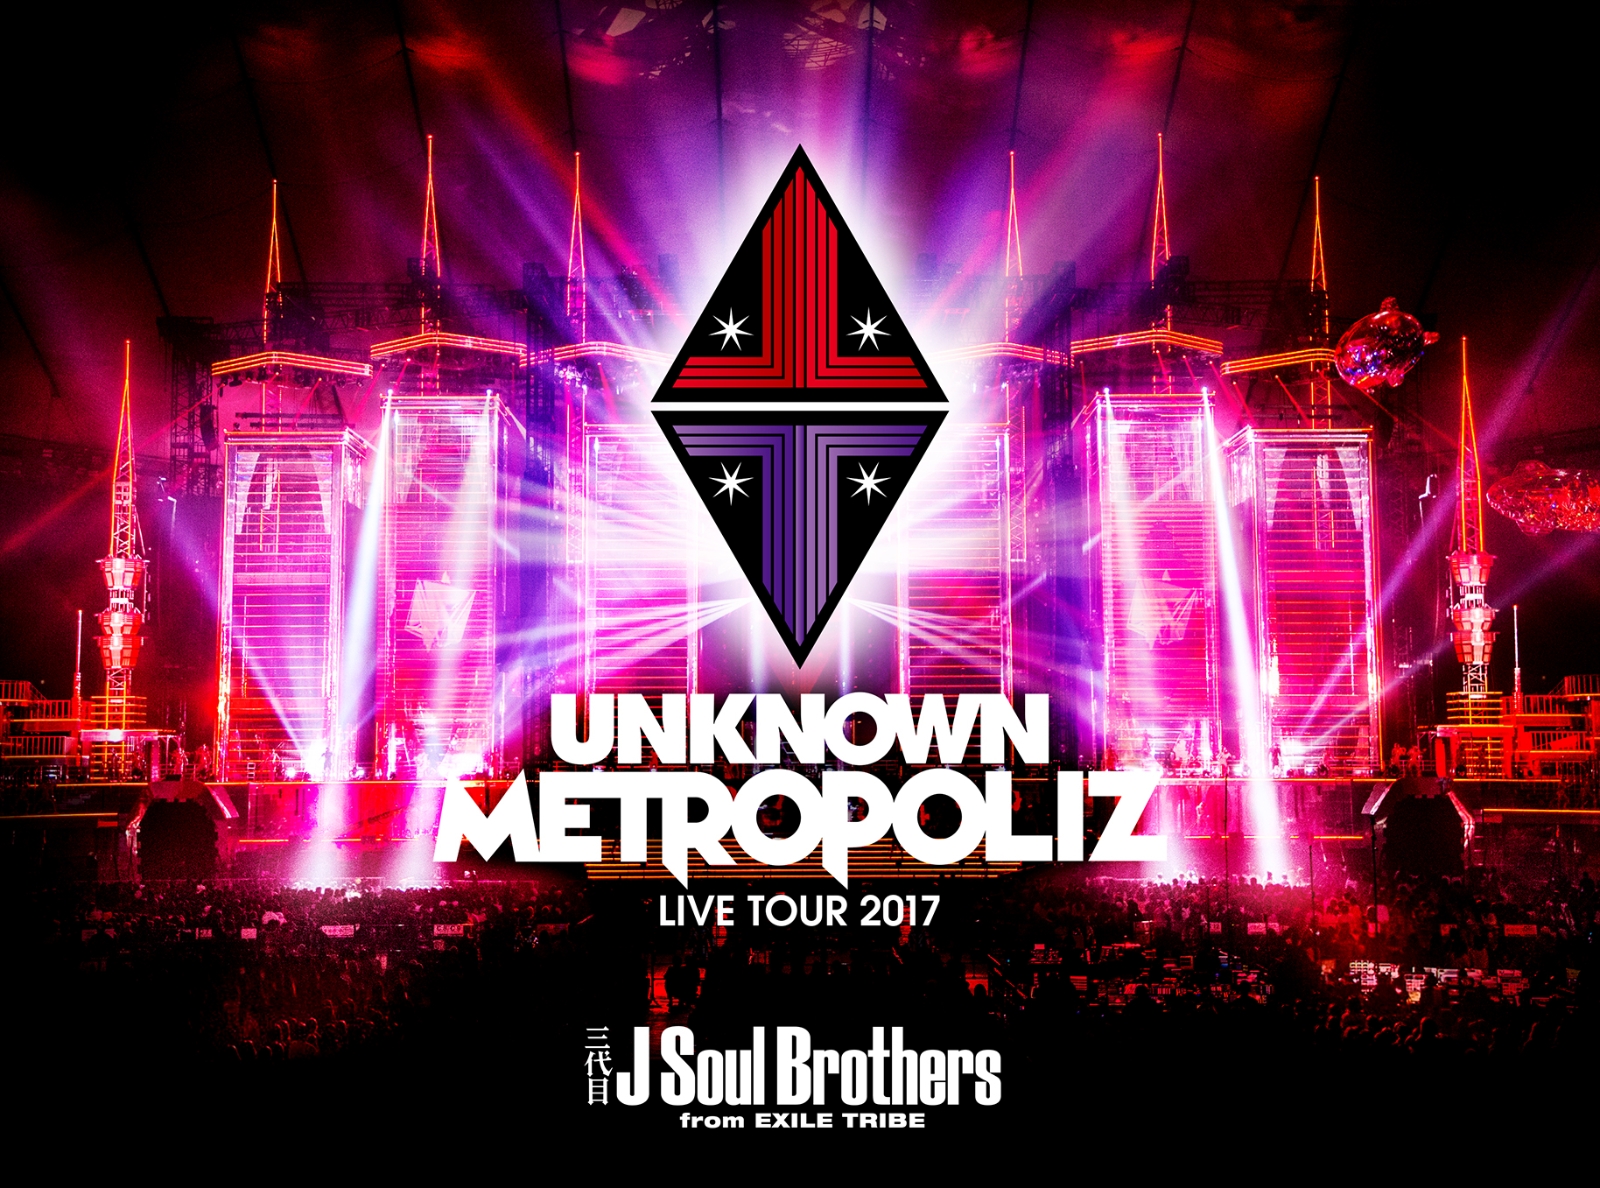 三代目 J Soul Brothers LIVE TOUR 2017 “UNKNOWN METROPOLIZ”画像